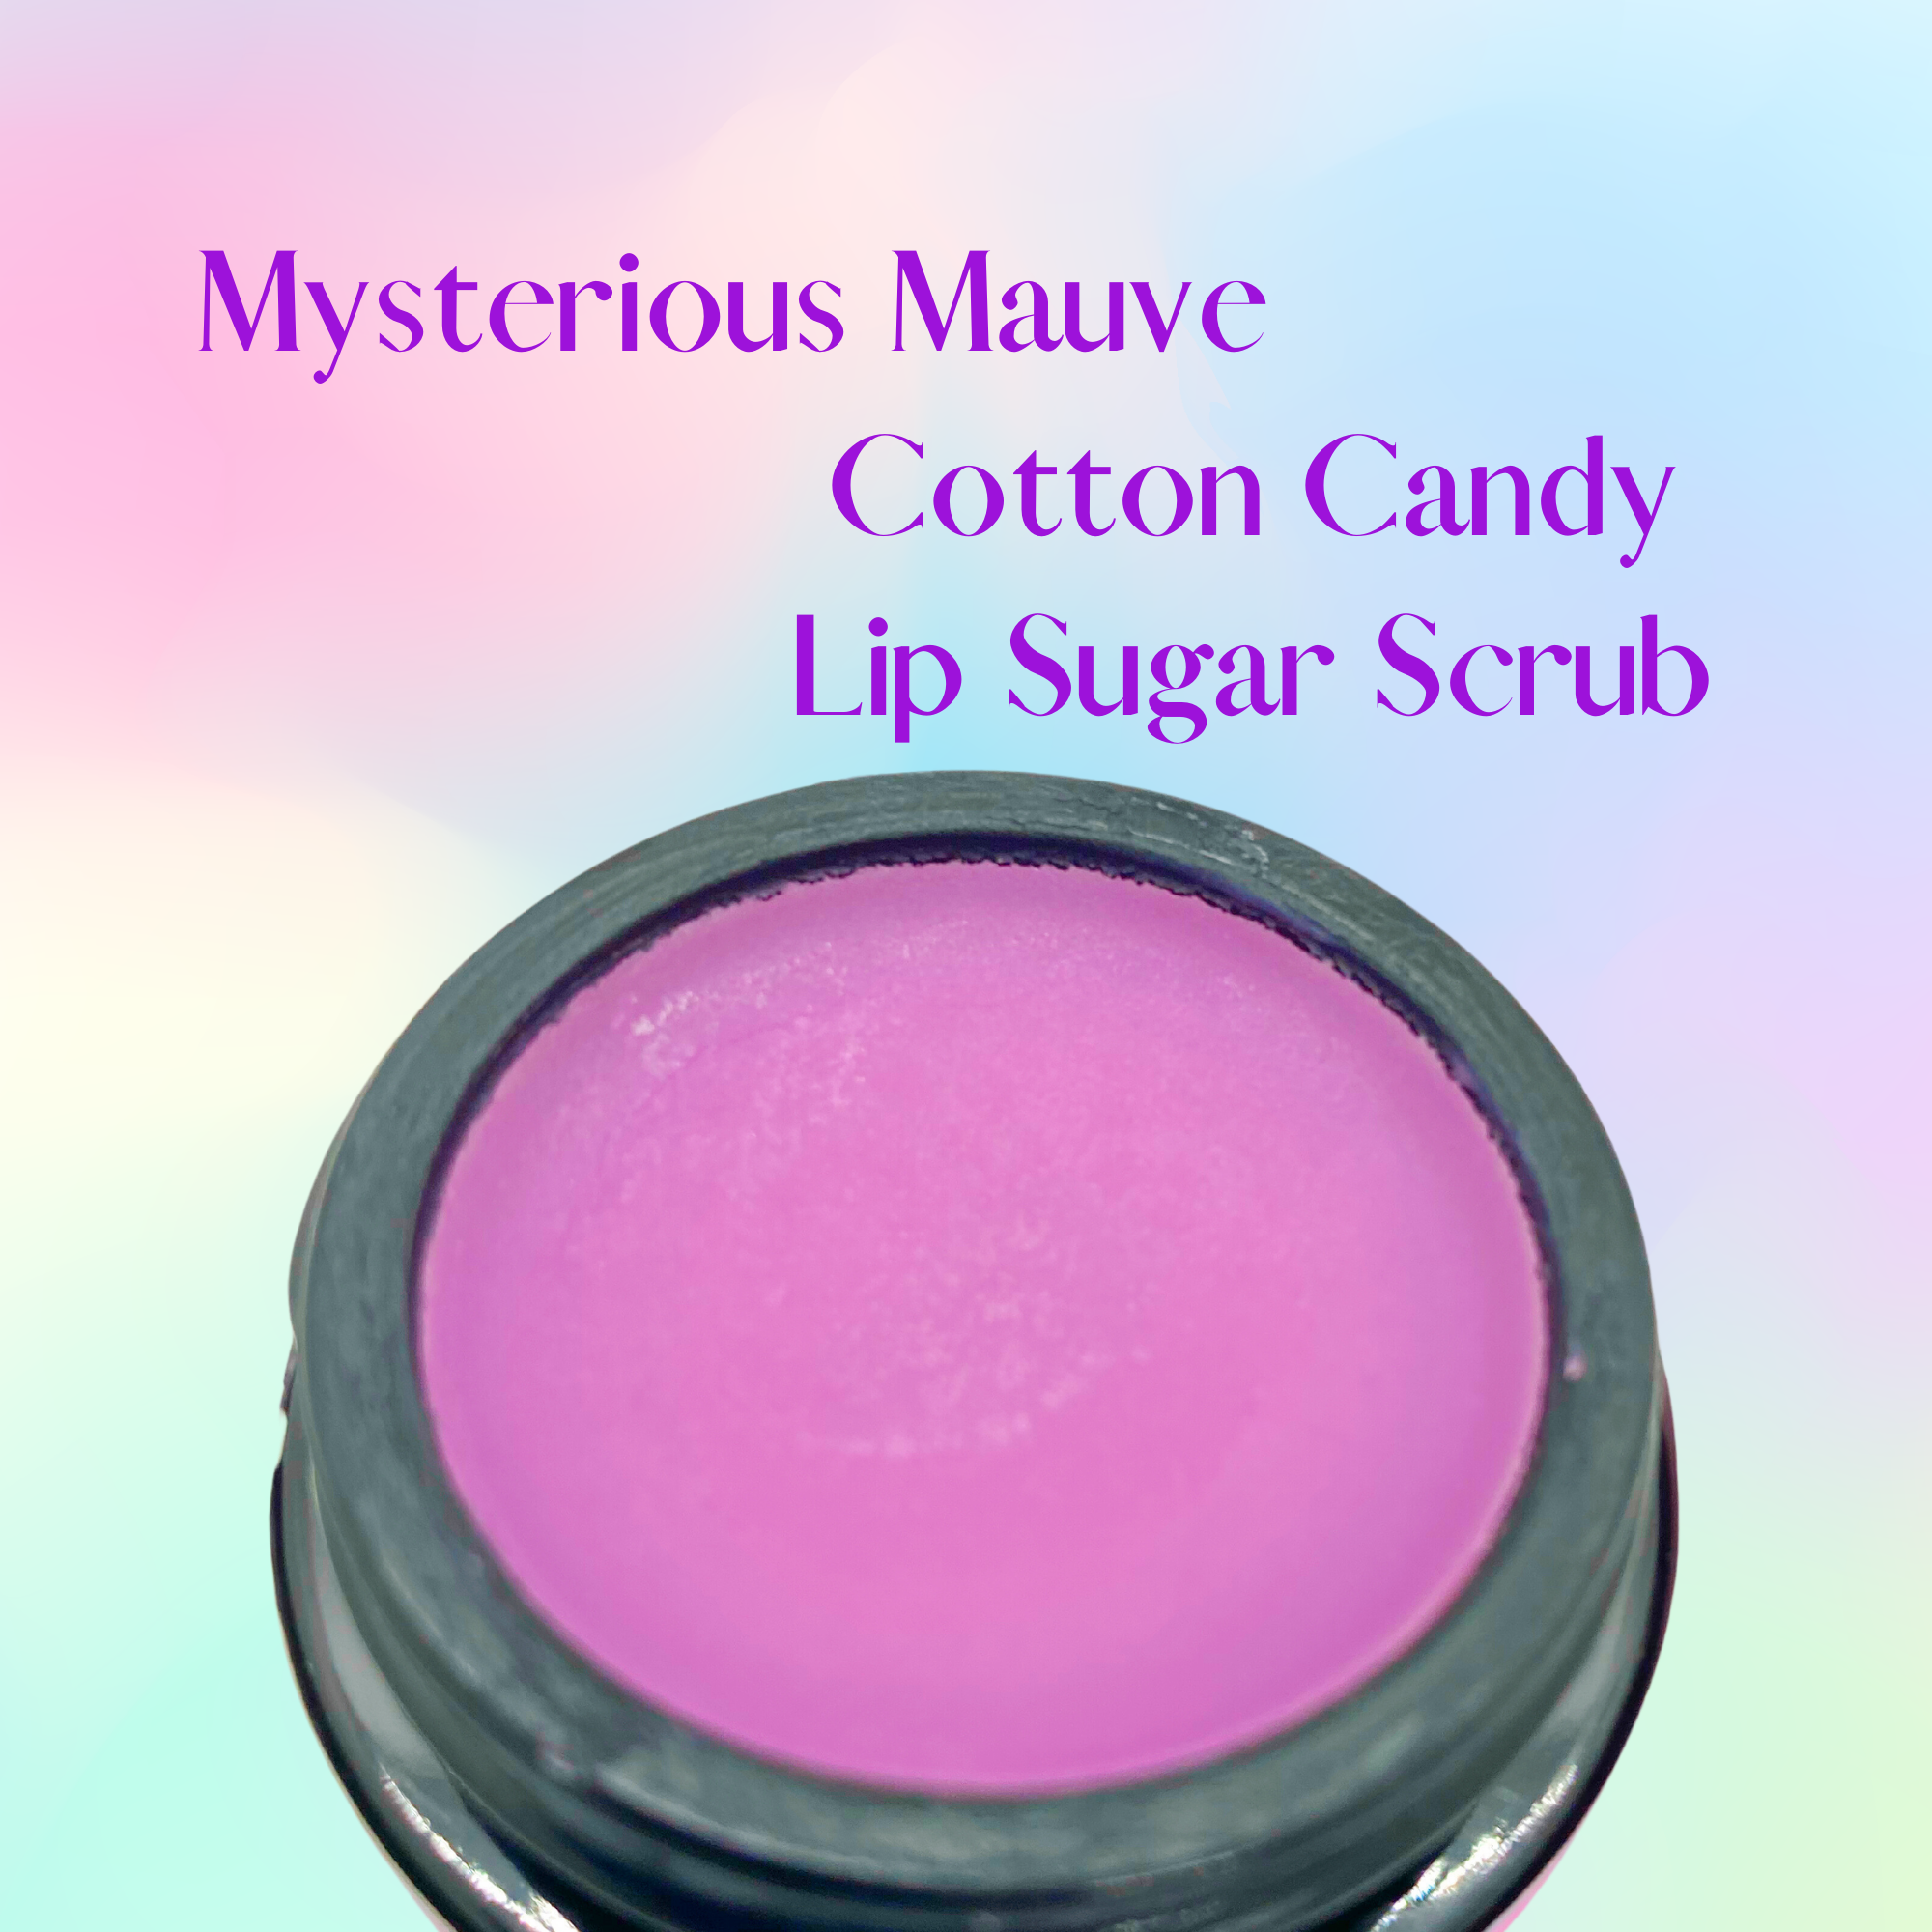 Mysterious Mauve Cotton Candy Lip Sugar Scrub